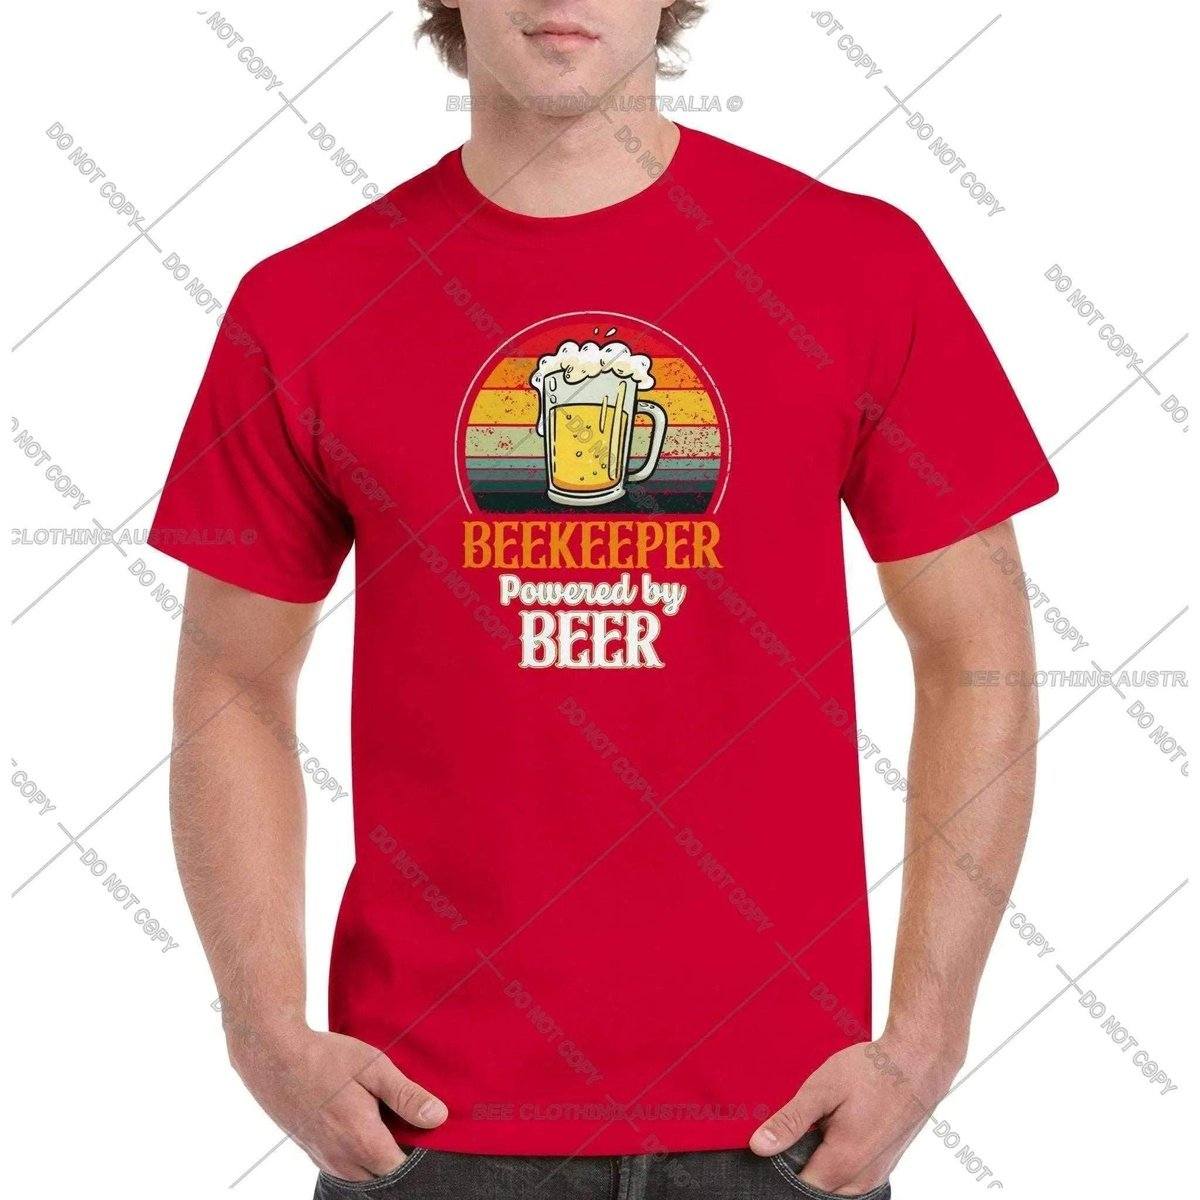 Beekeeper - Powered By Beer Tshirt - Retro Vintage Bee - Unisex Crewneck T-shirt Australia Online Color Red / S